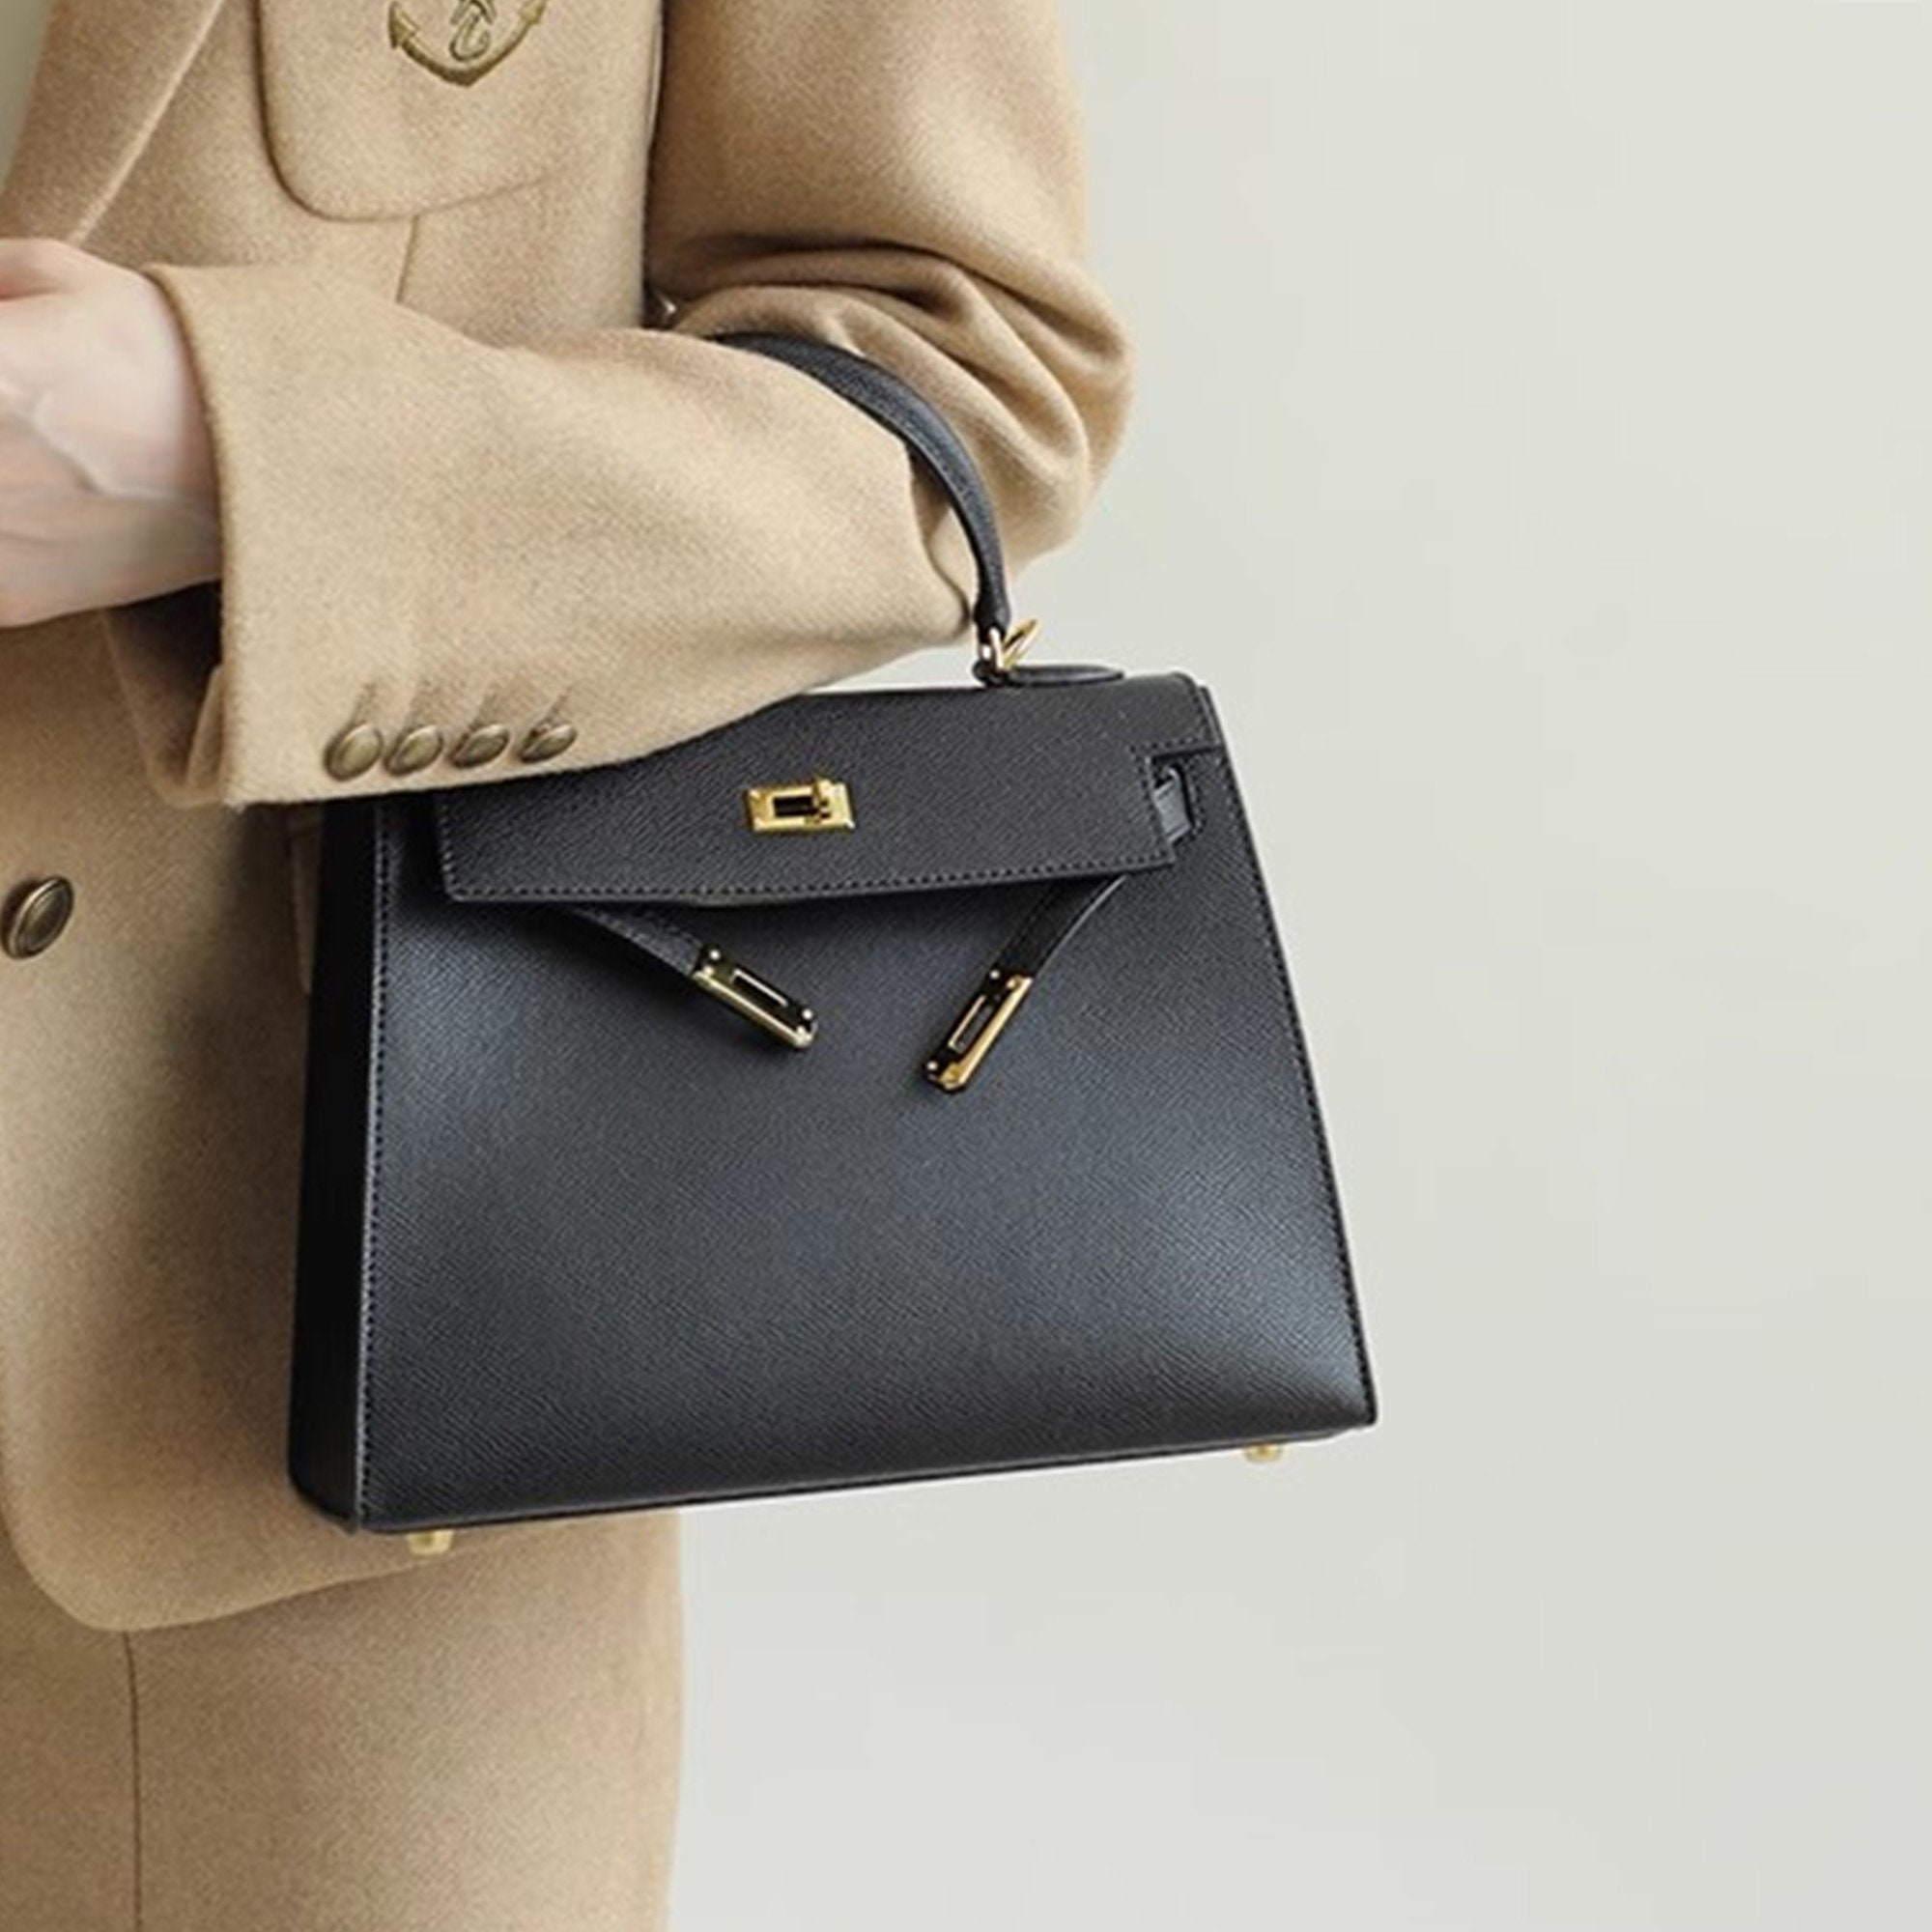 Replica Hermes Kelly Pochette Bag In Taupe Grey Epsom Leather